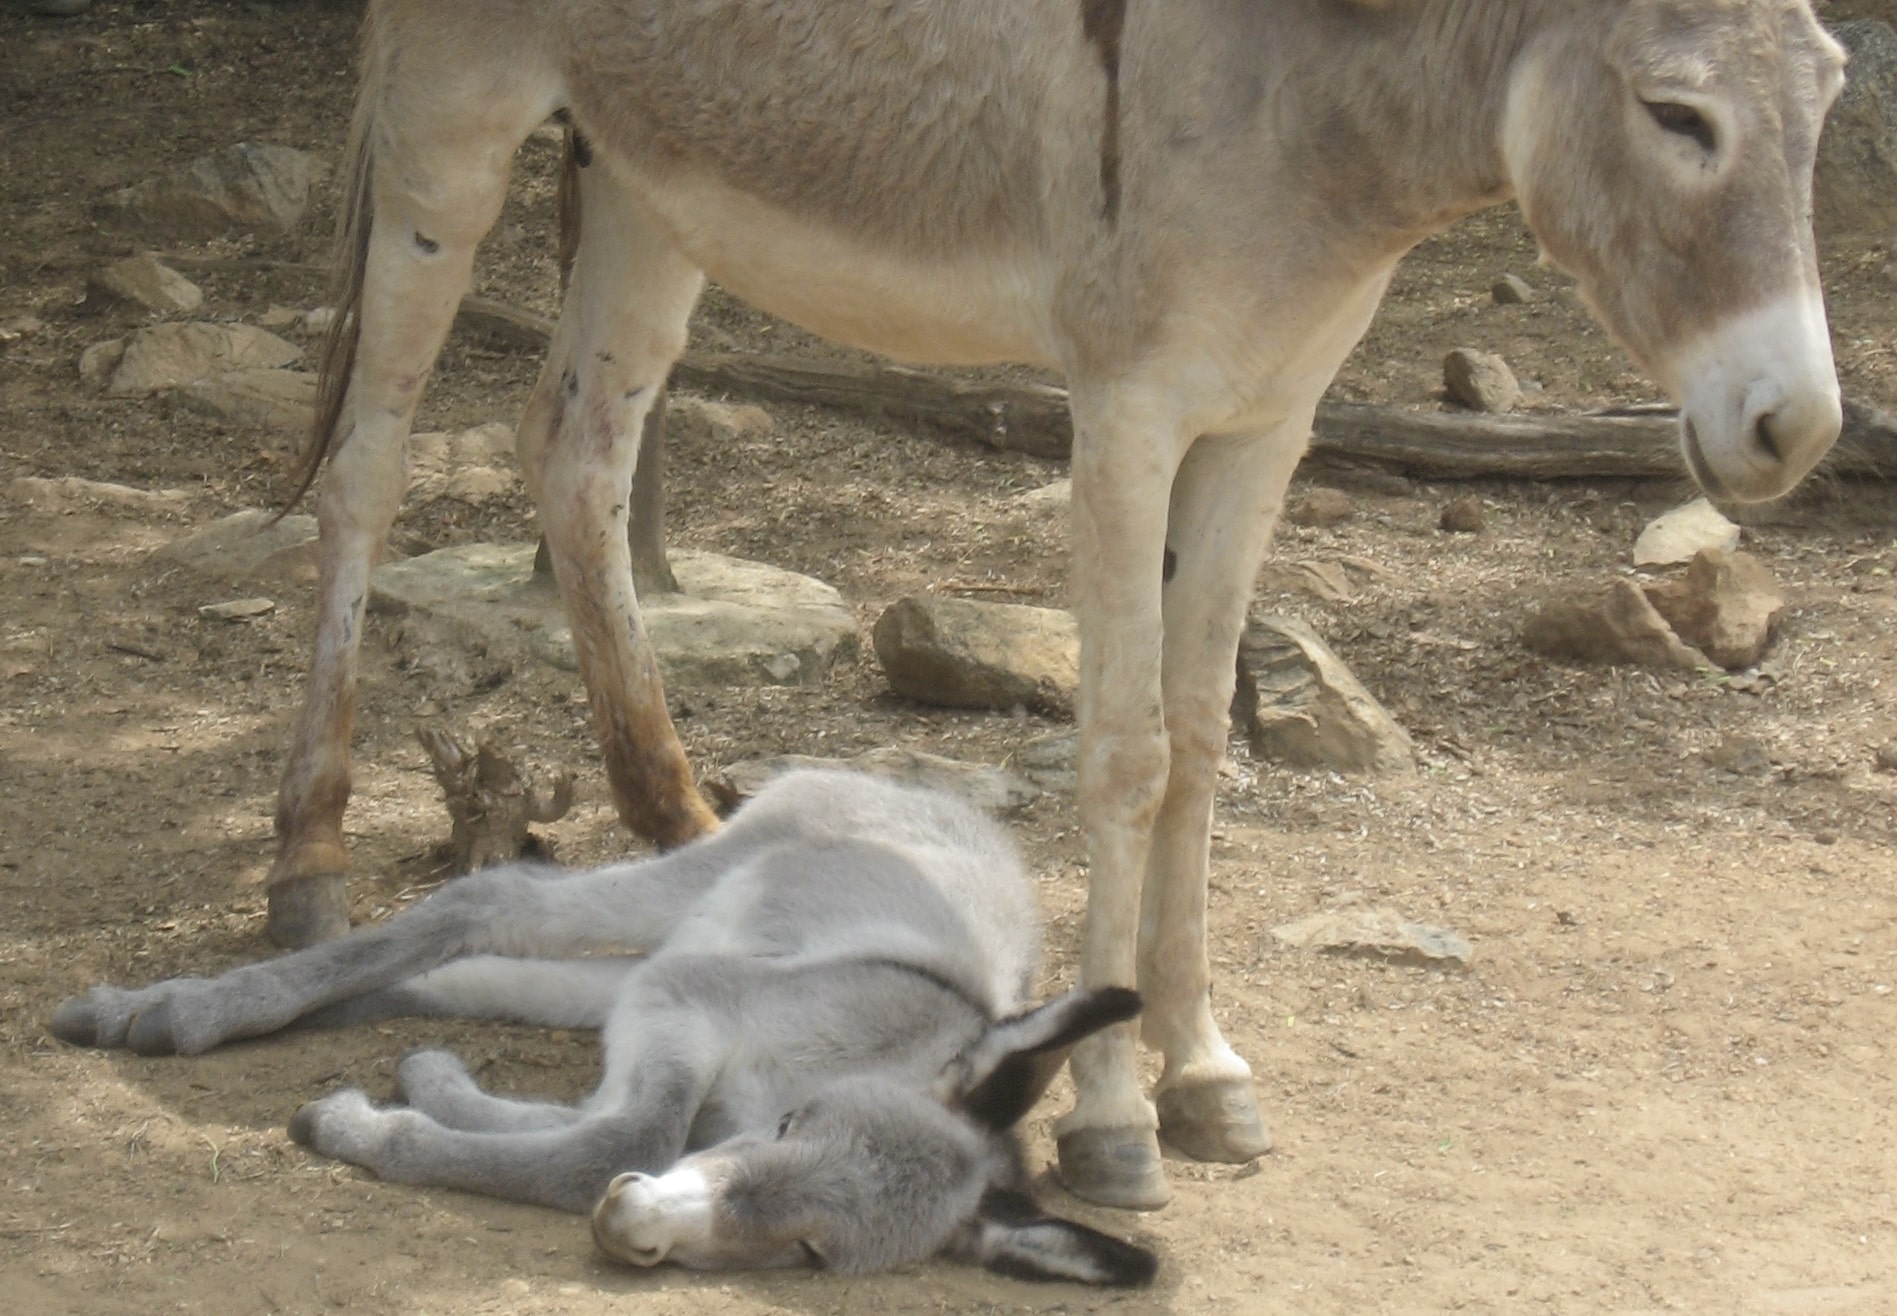 Aruba Donkey Sanctuary I